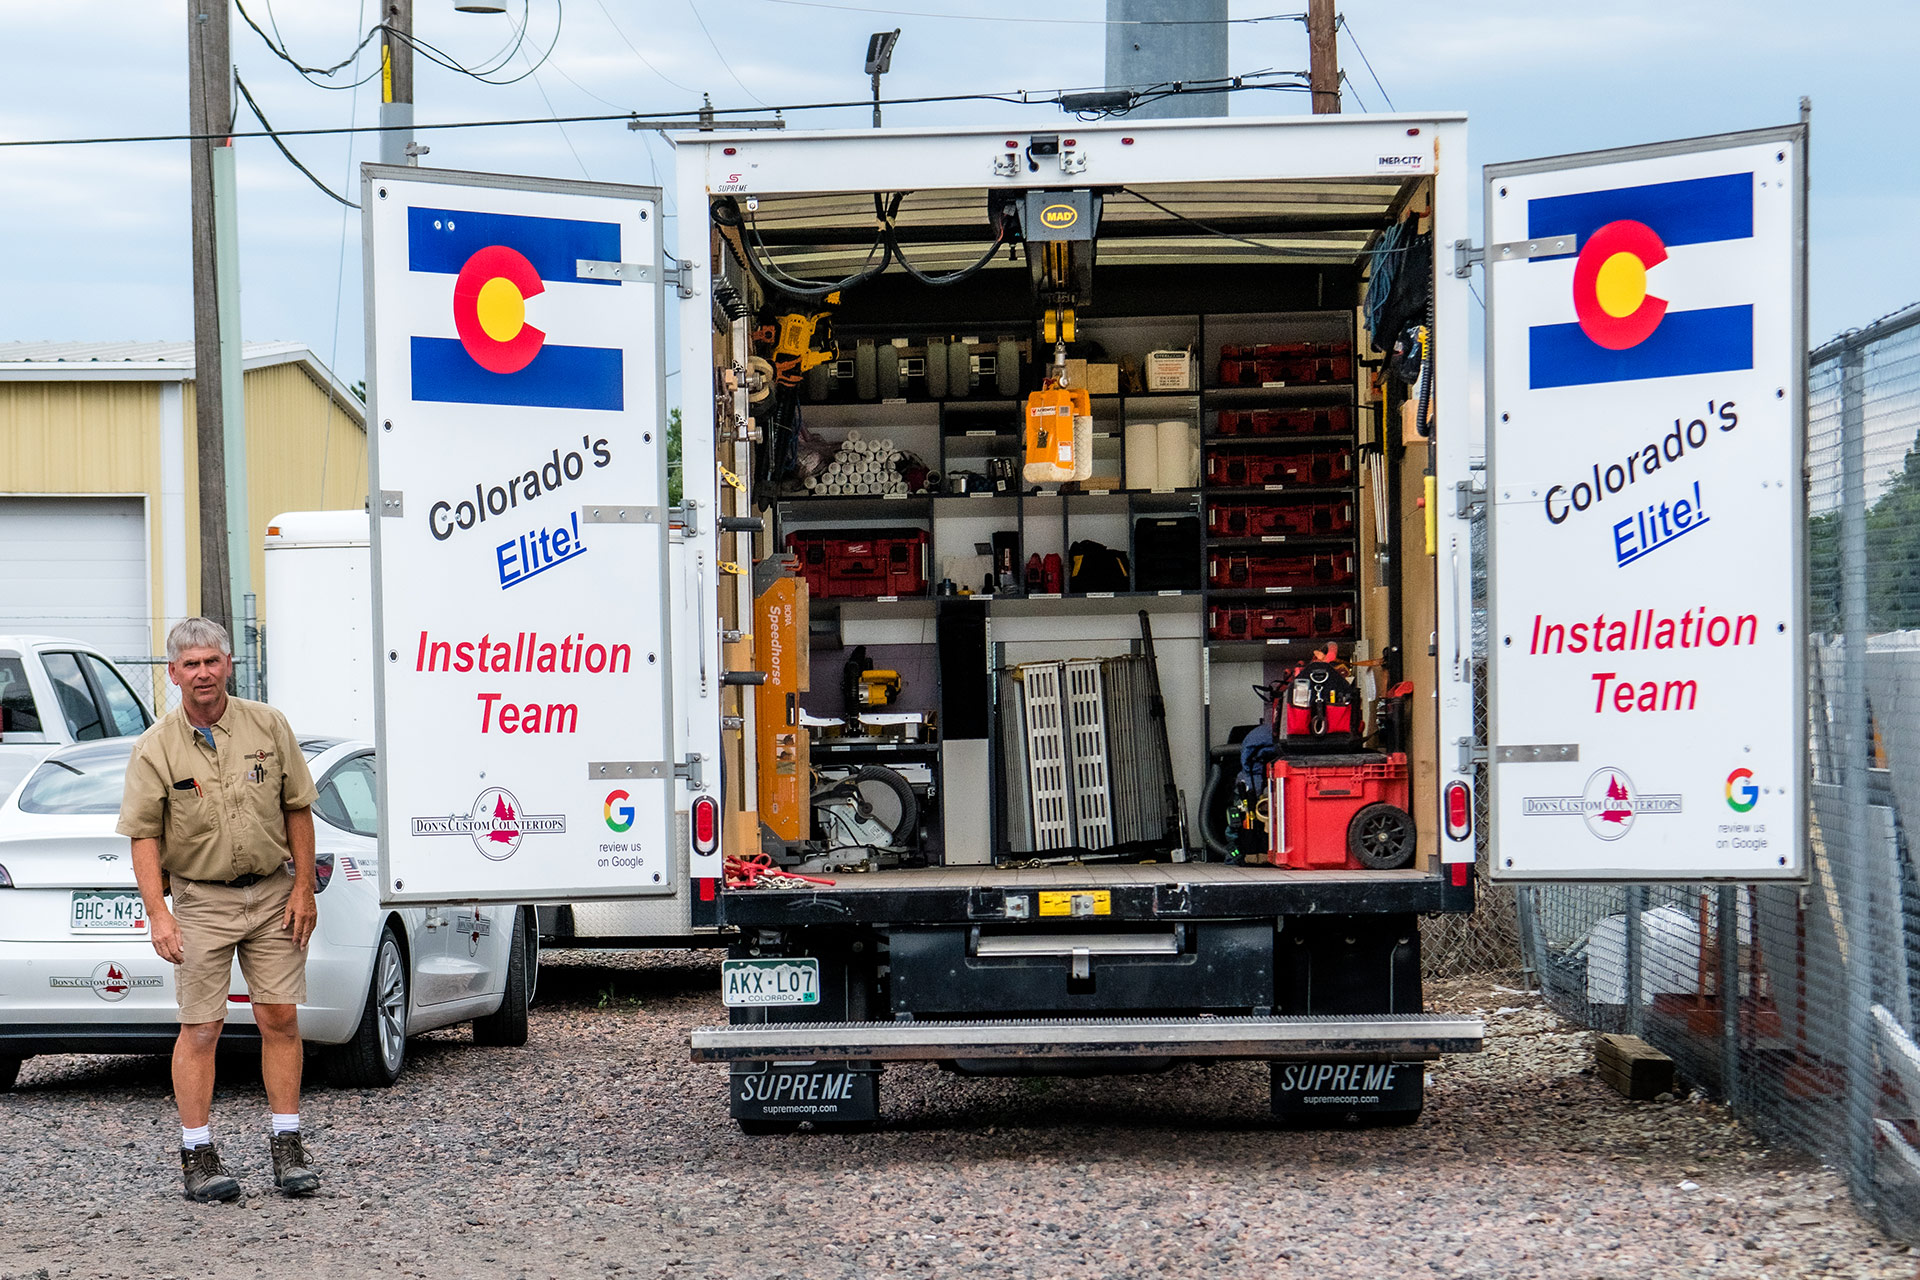 Colorado's Elite Installation Team Truck Image